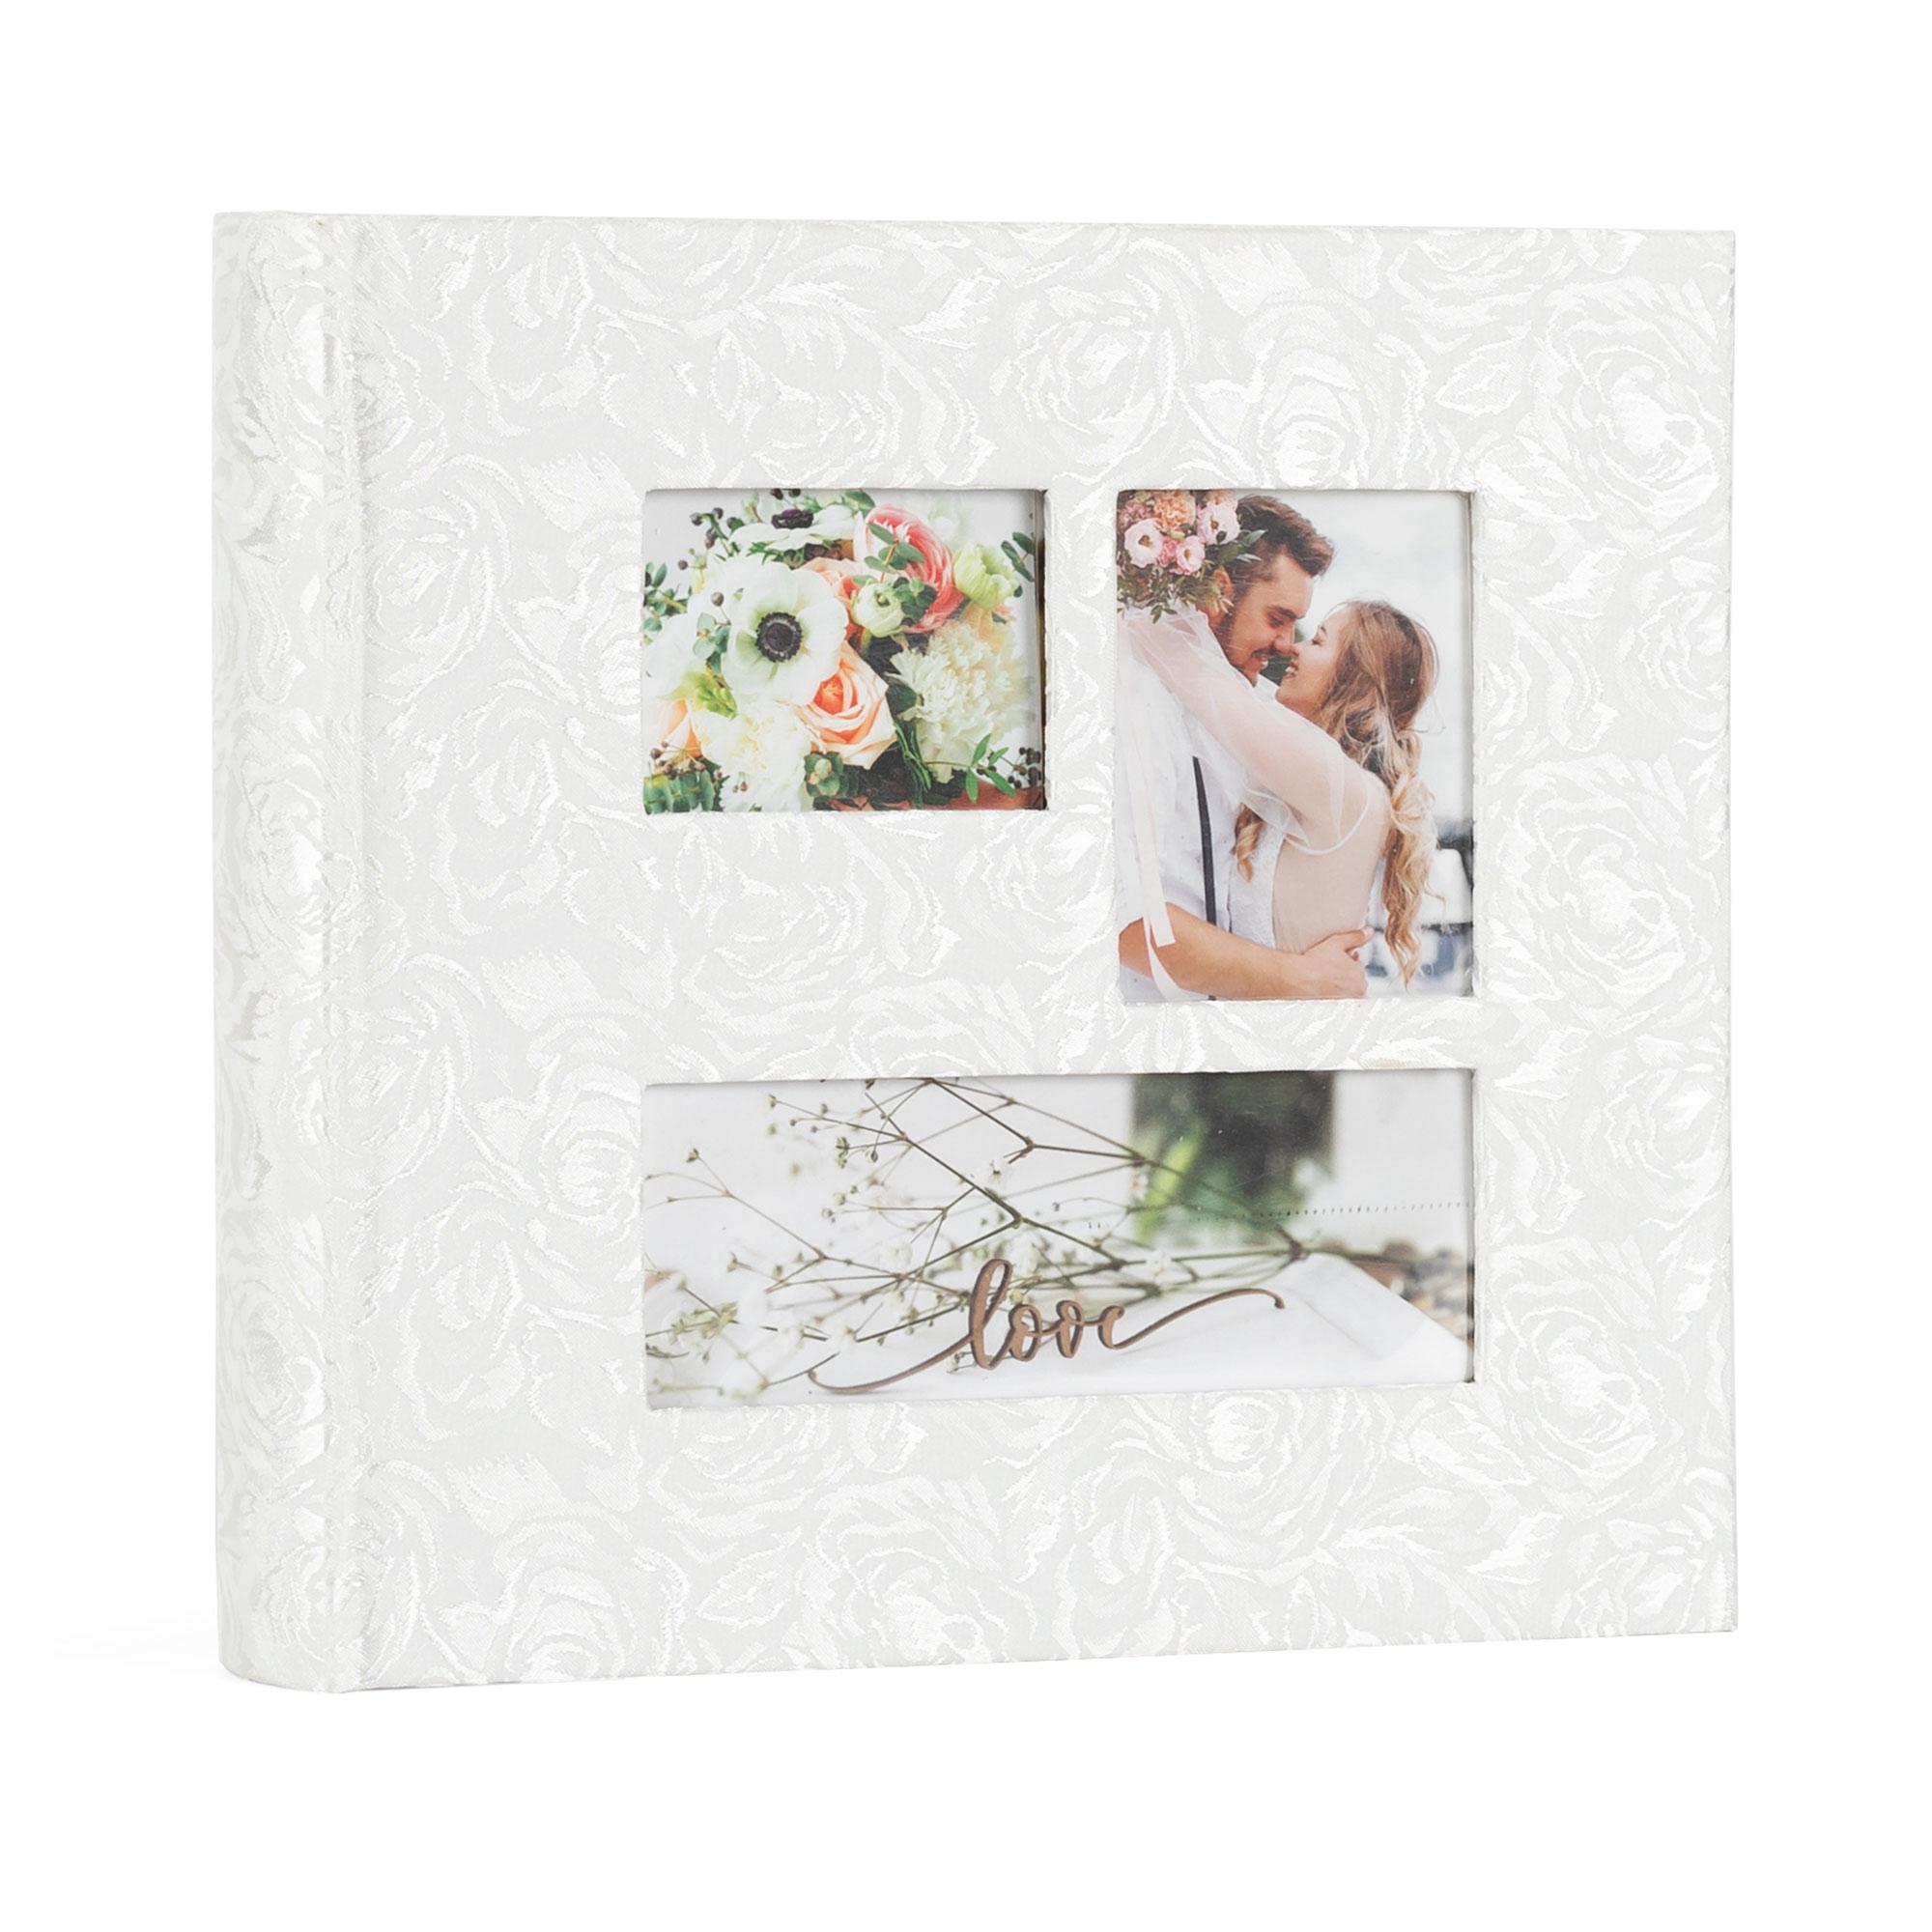 Love 6x4.5 Digital Photo Slip-in Wedding Album